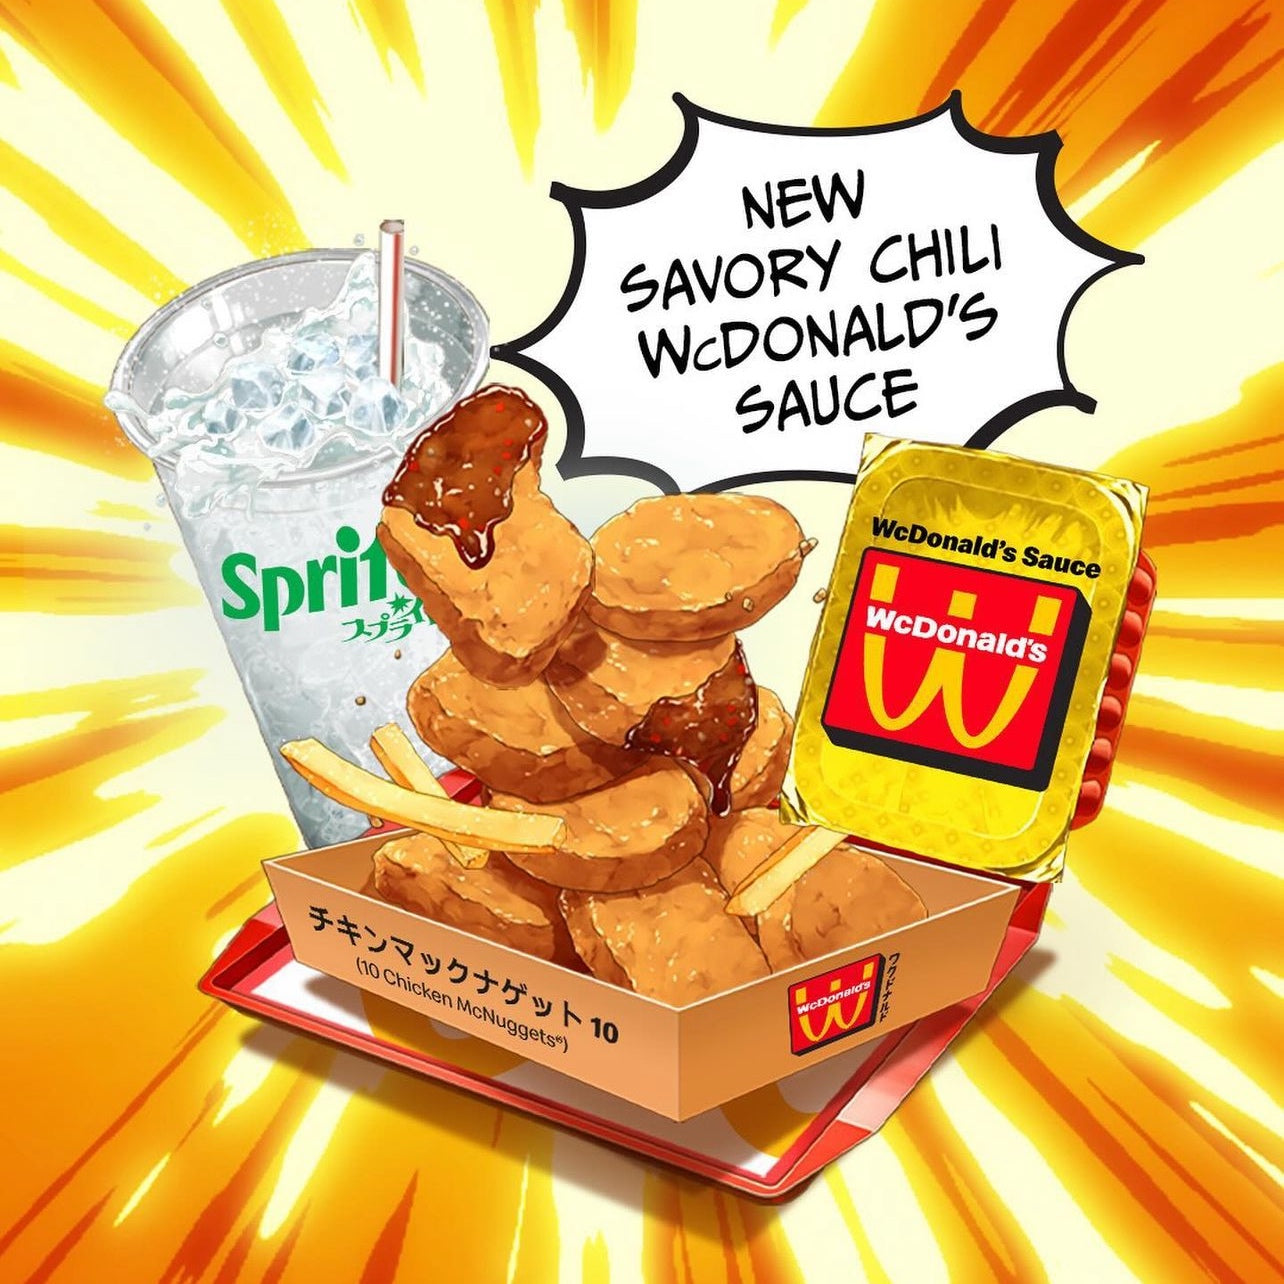 New Savory Chili WcDonald's Sauce